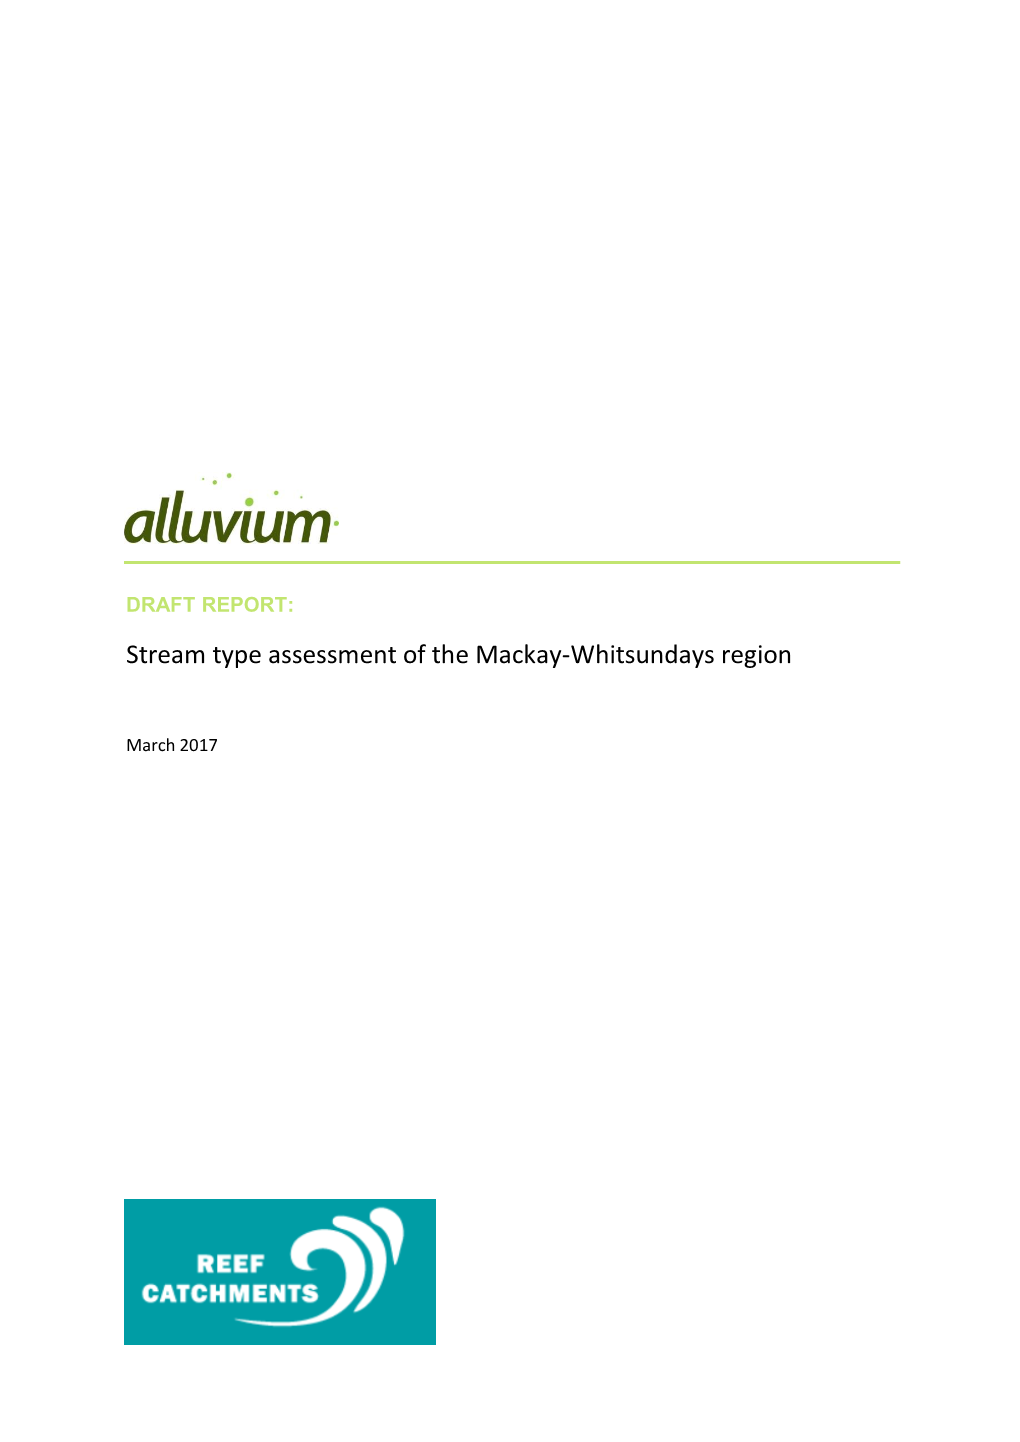 Stream Type Assessment of the Mackay-Whitsundays Region